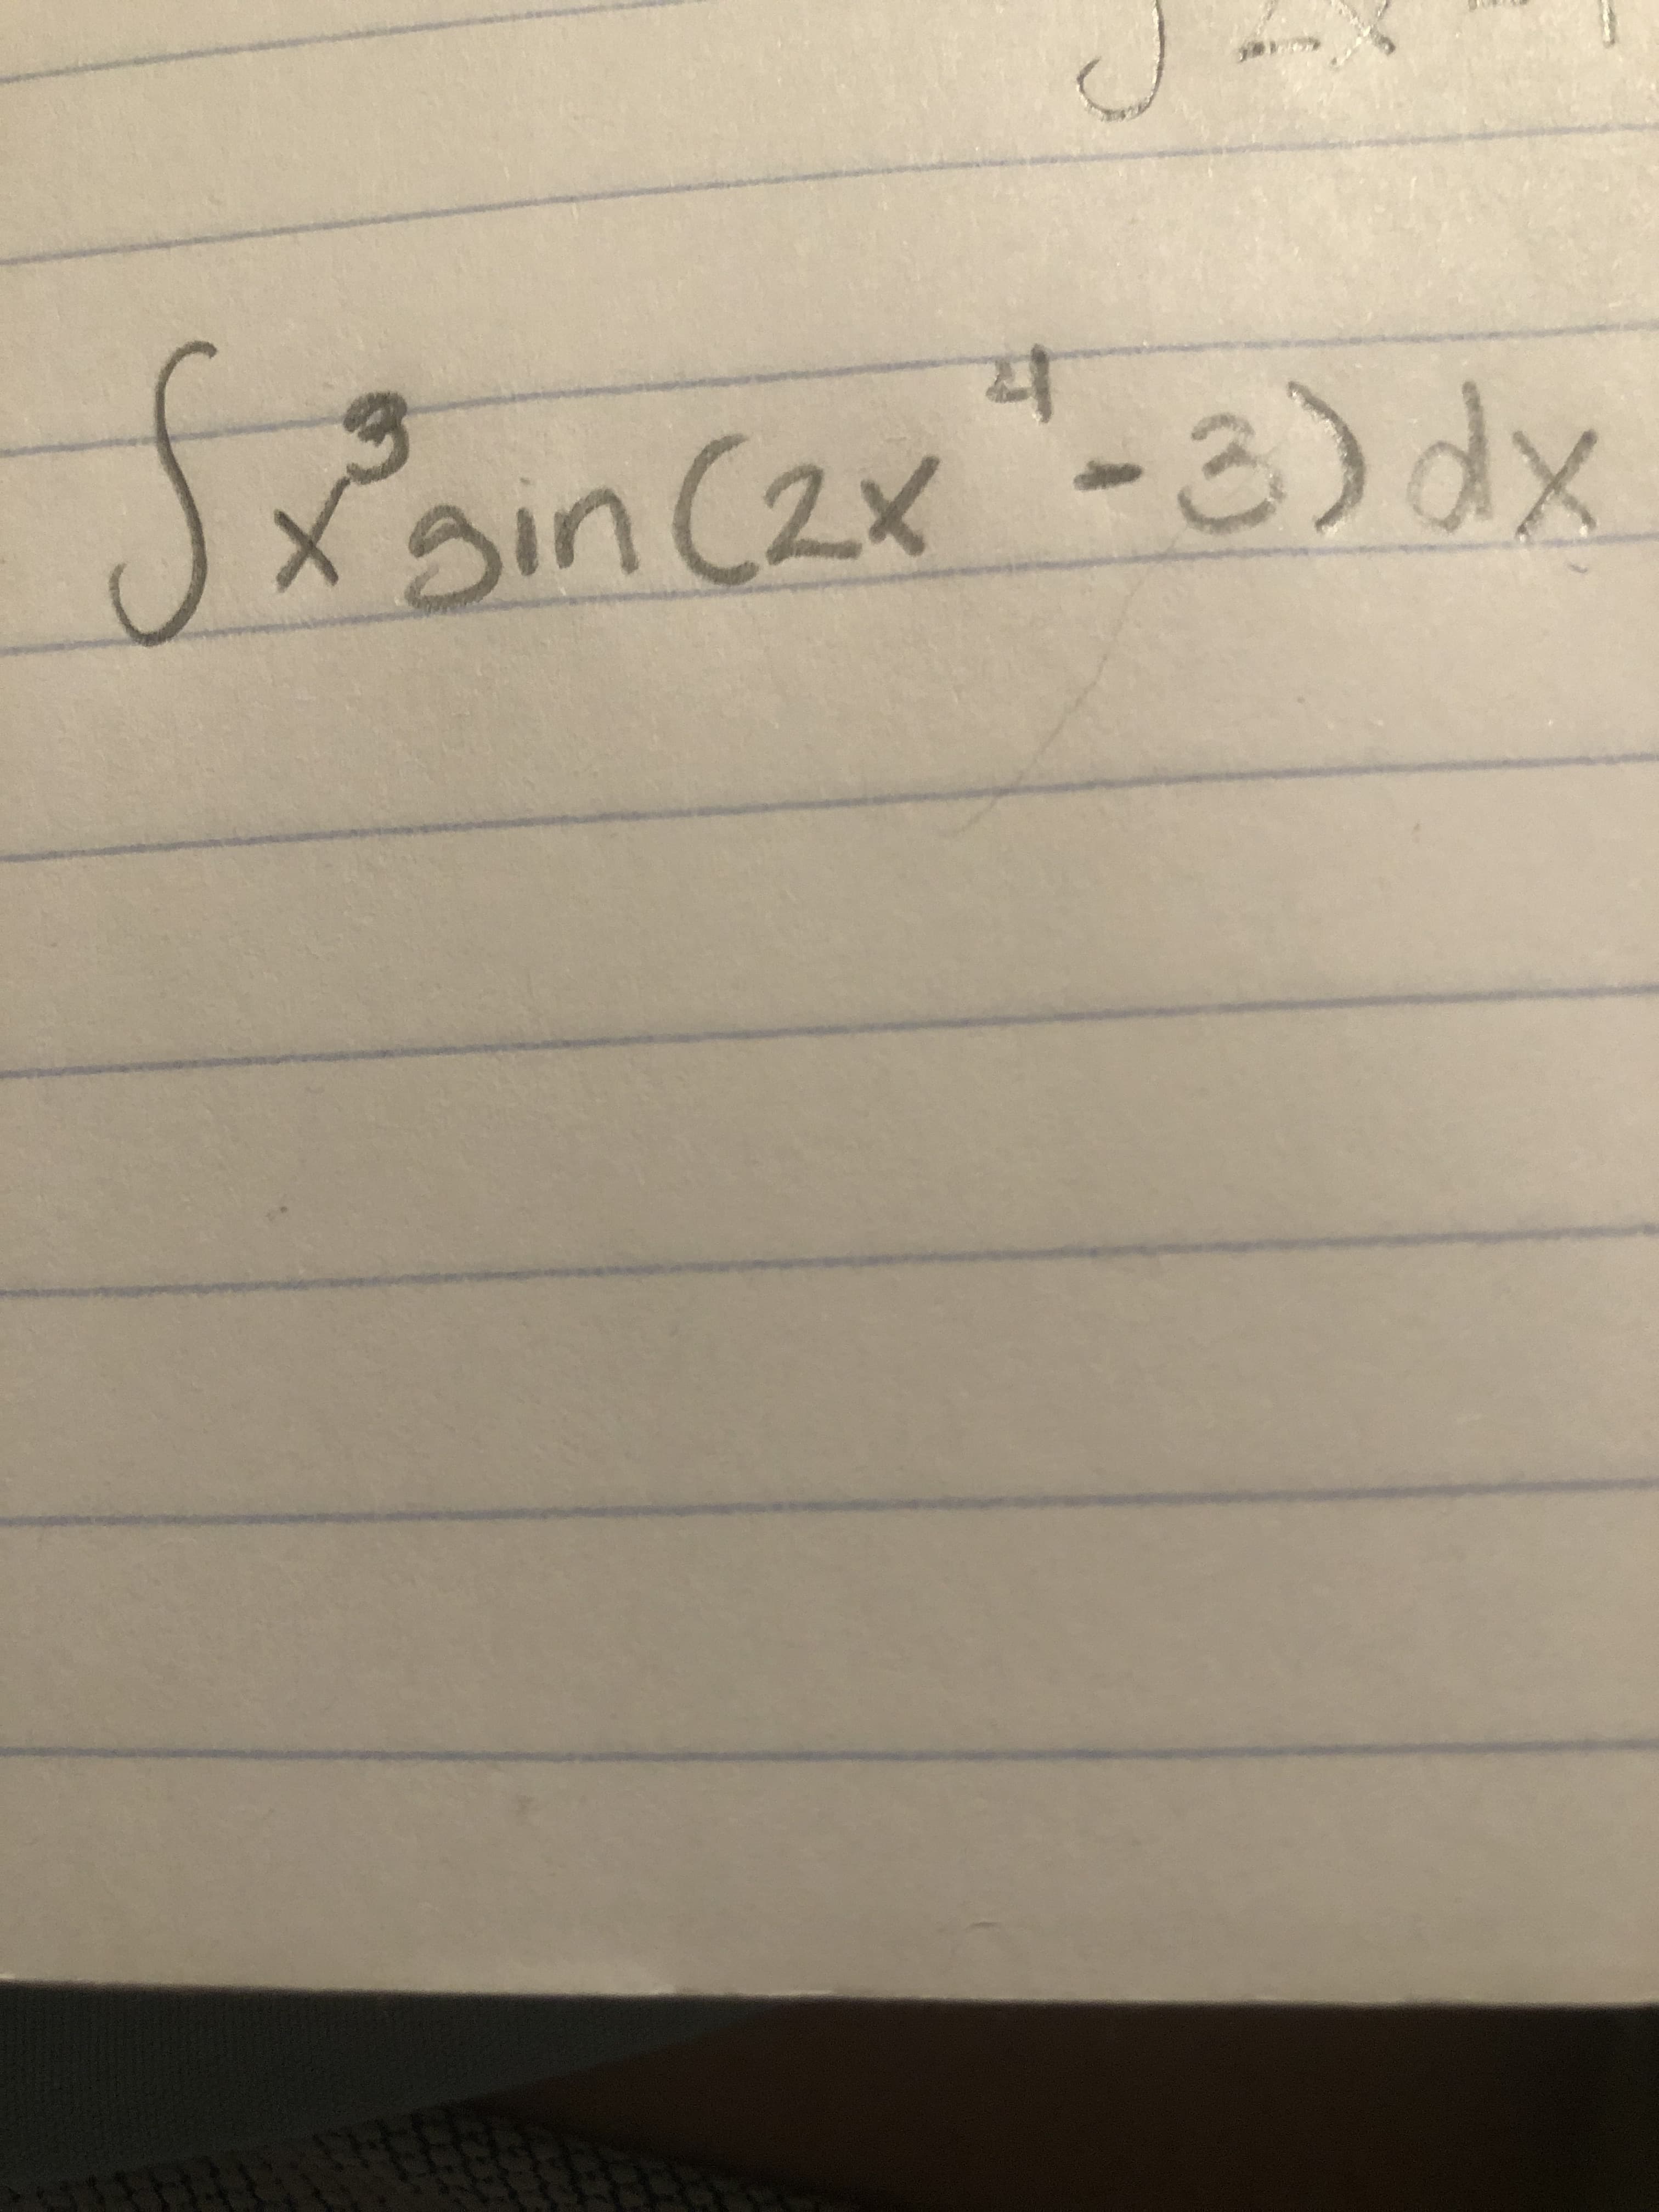 Jxsin (2x -8)dx
xp(2
